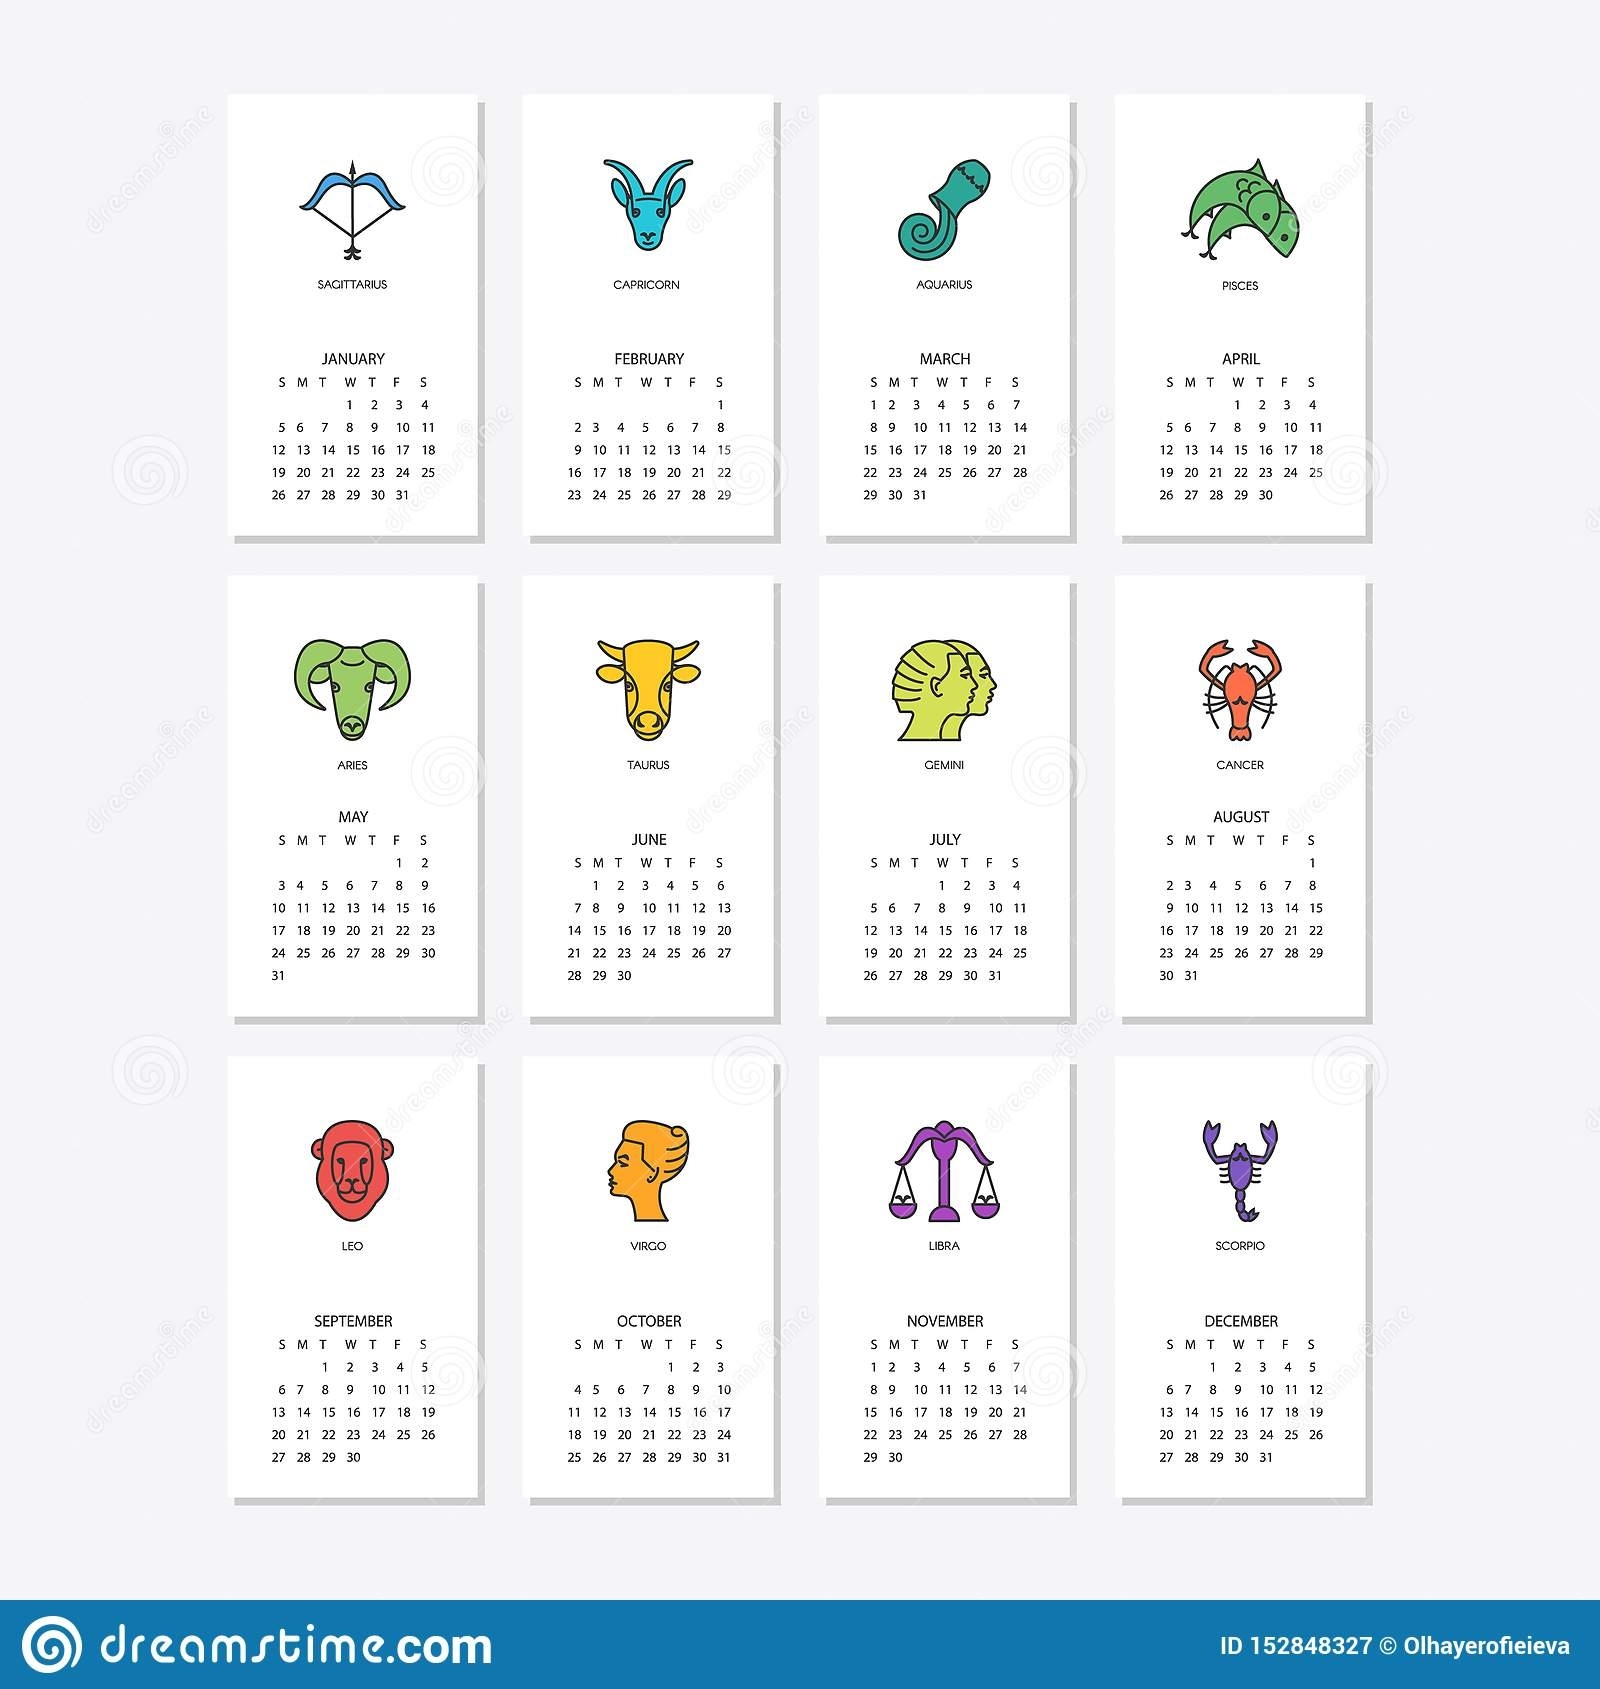 Calendar 2020 With Horoscope Signs Zodiac Symbols Set Stock Calendar Of The Zodiac Signs